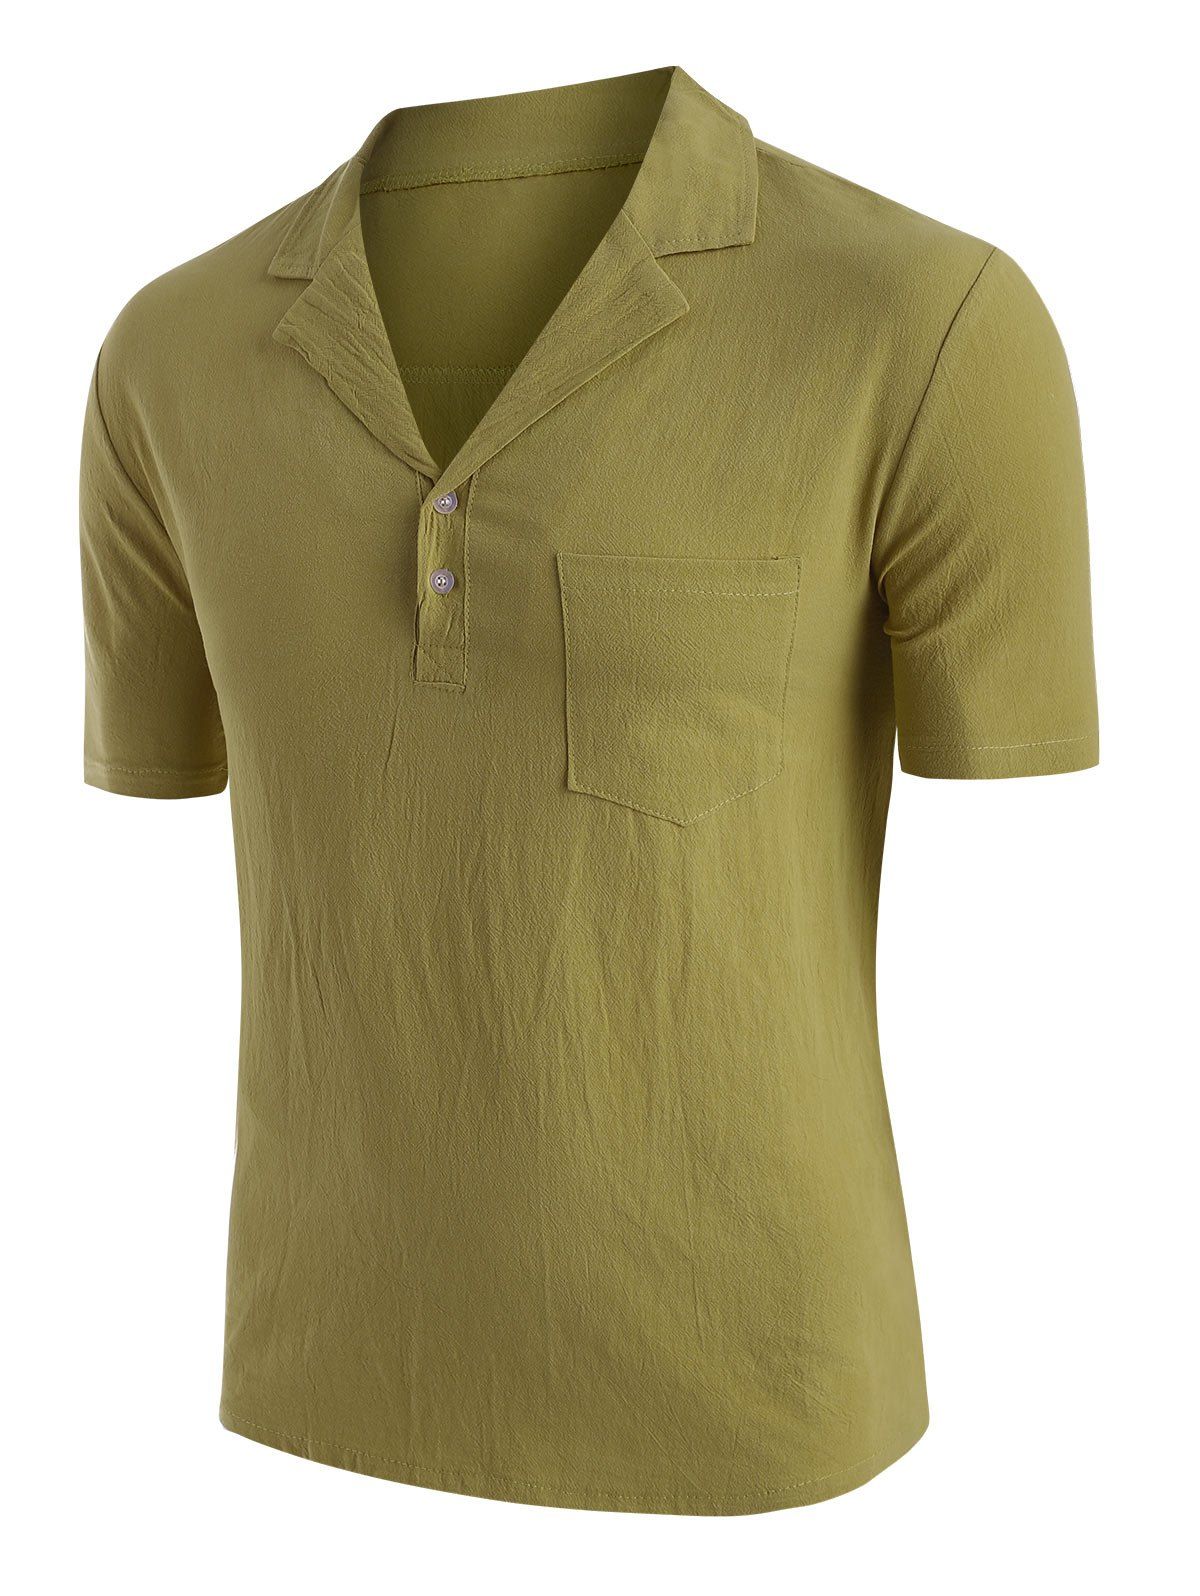 T-shirt en Couleur Unie avec Poche Poitrine - Vert clair 3XL